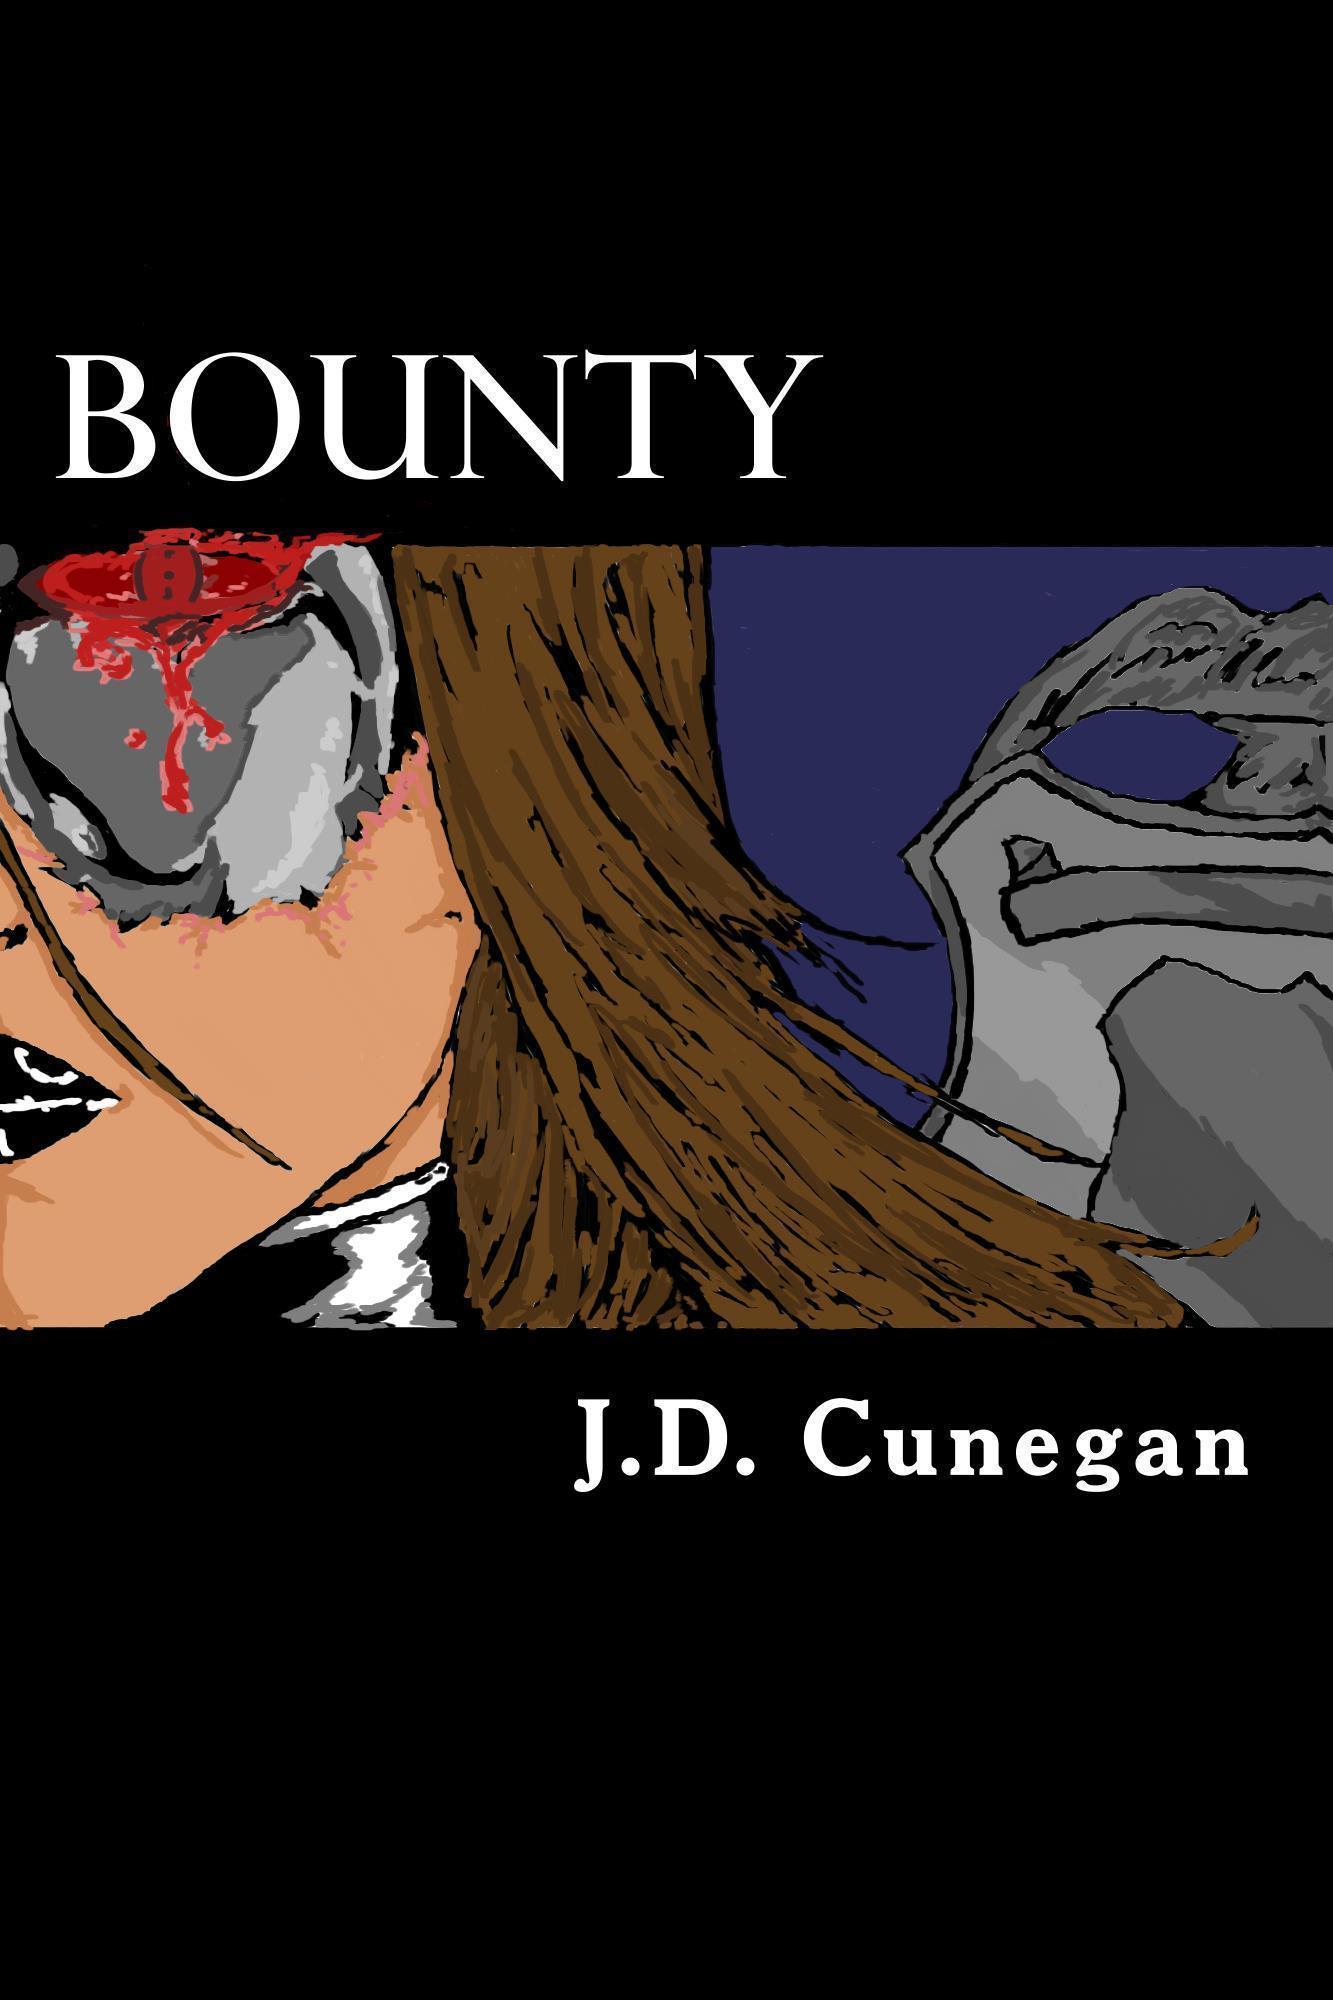 Bounty by J.D. Cunegan